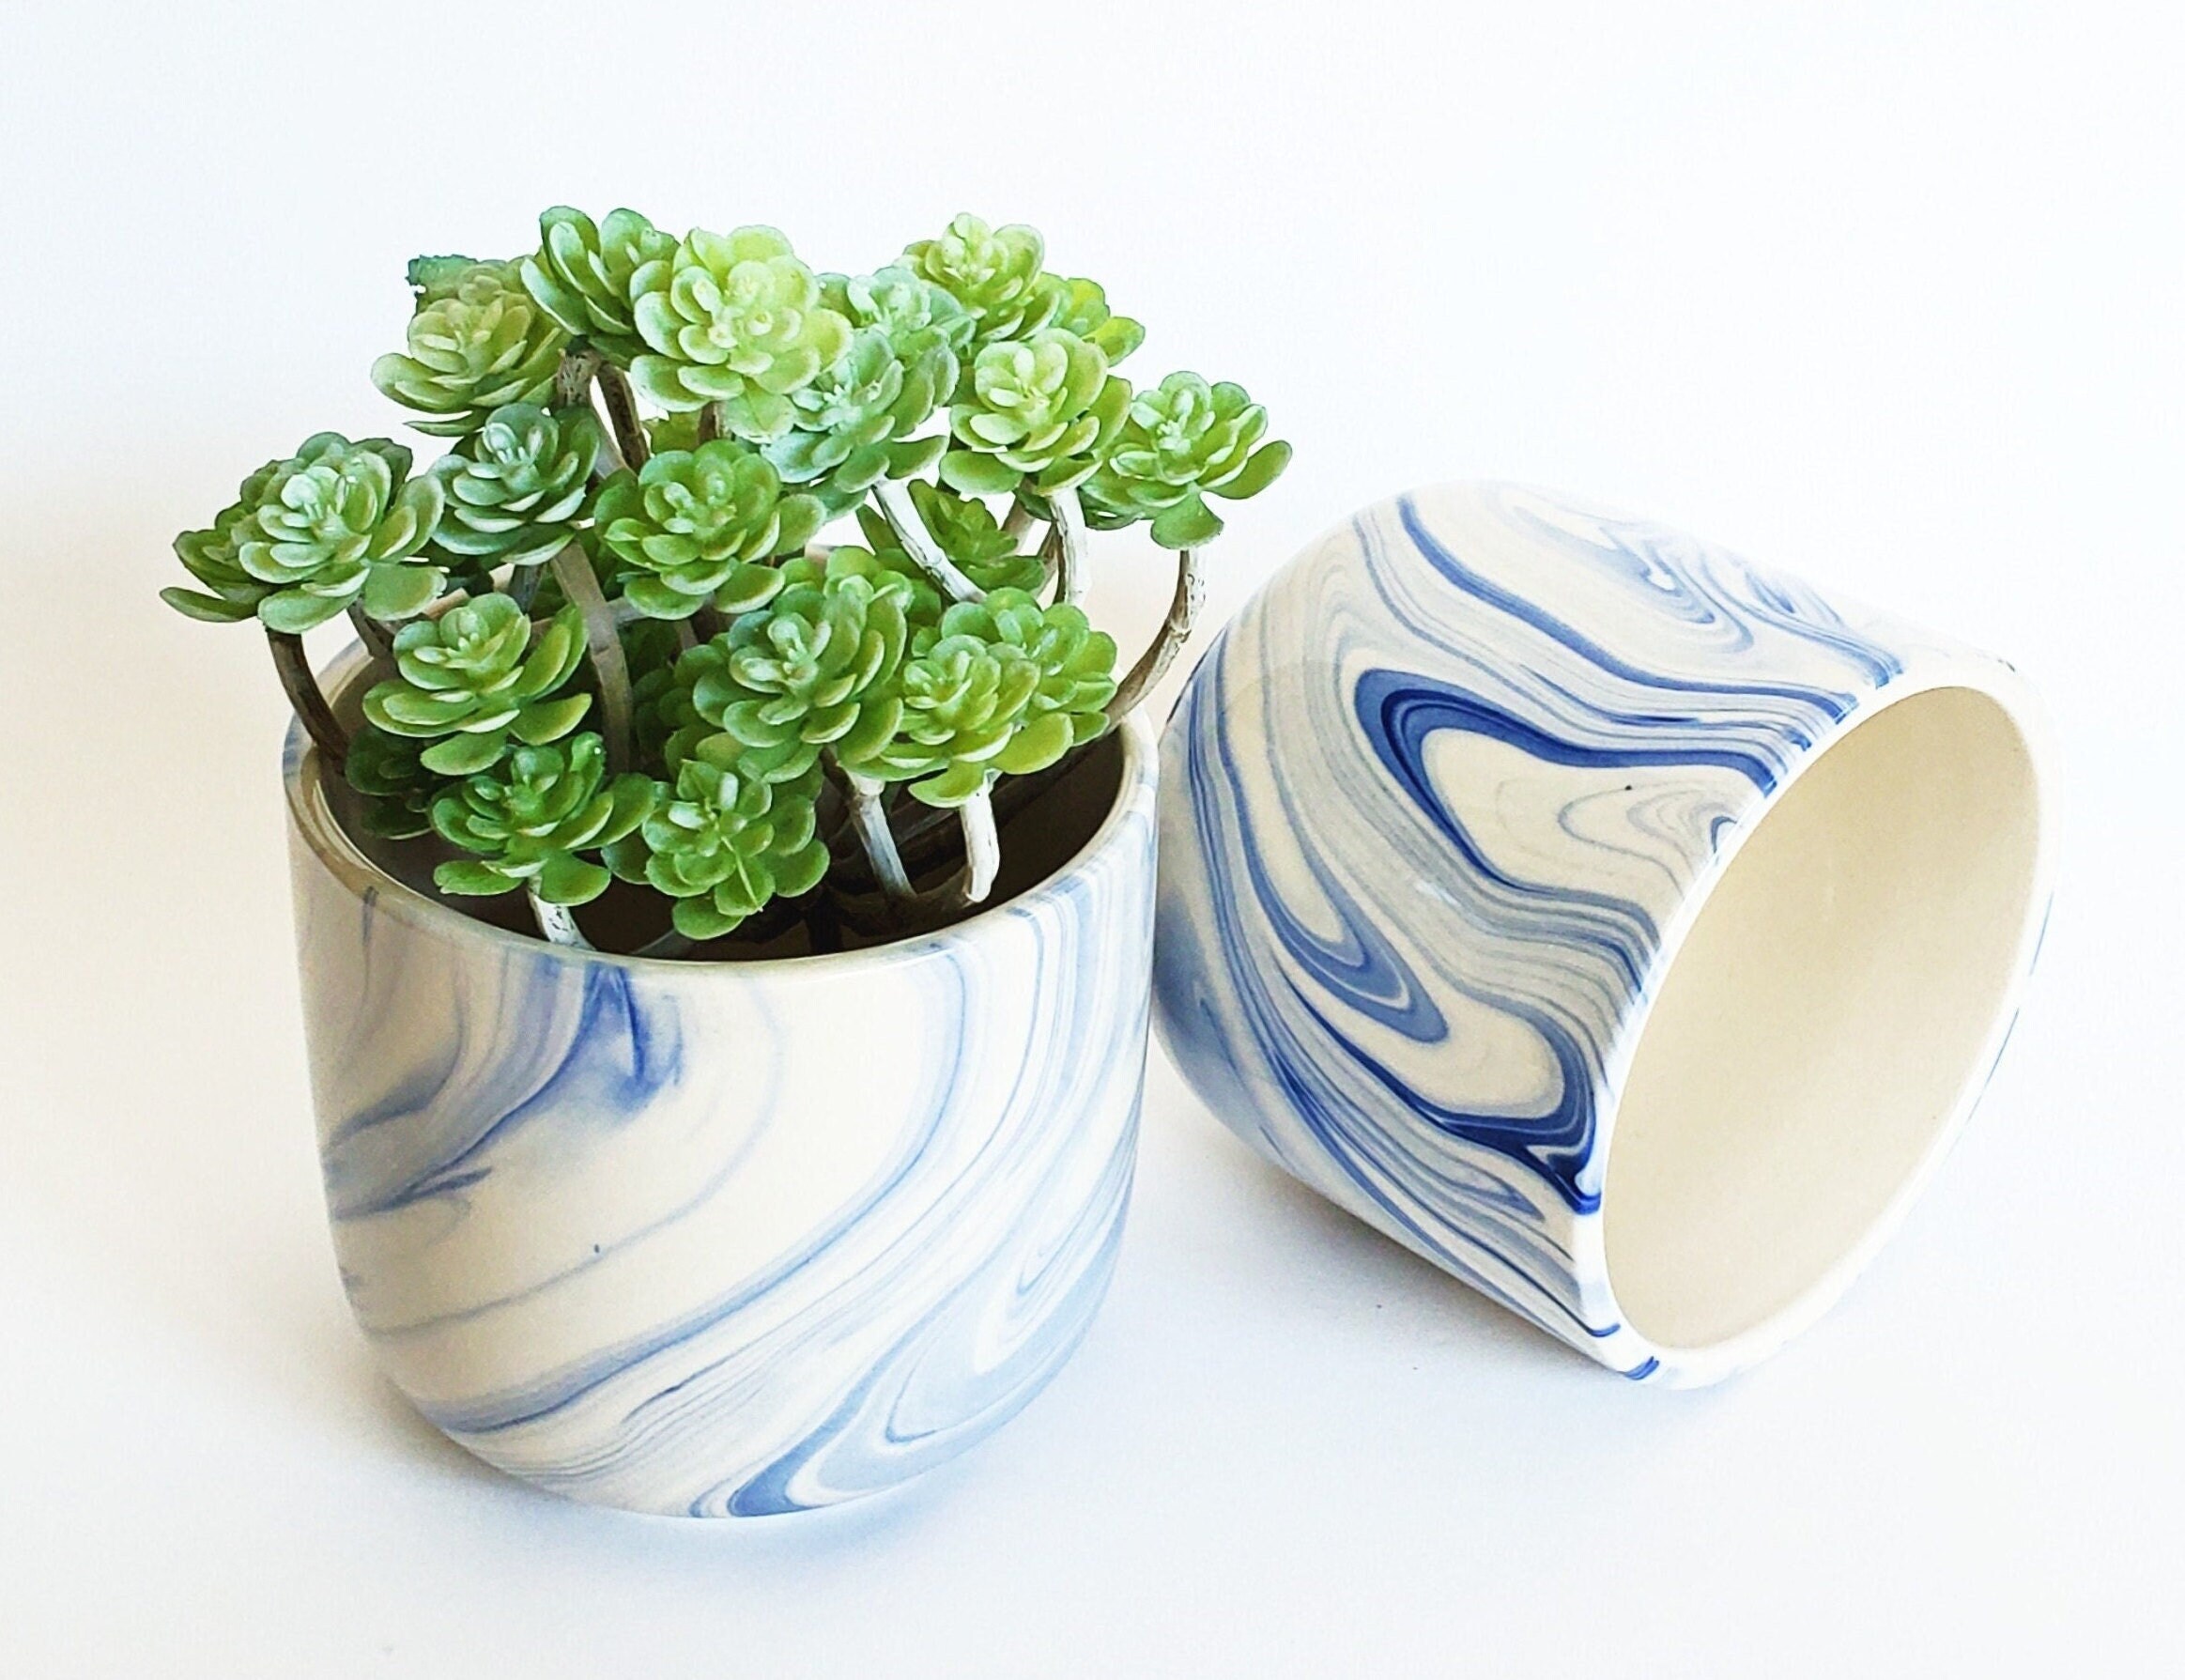 Good Quality Flower Planter Vases Mini Marble Ceramic Polka Dots Flower Pot  Plants Home Office Decor Garden Supplies - Flower Pots & Planters -  AliExpress